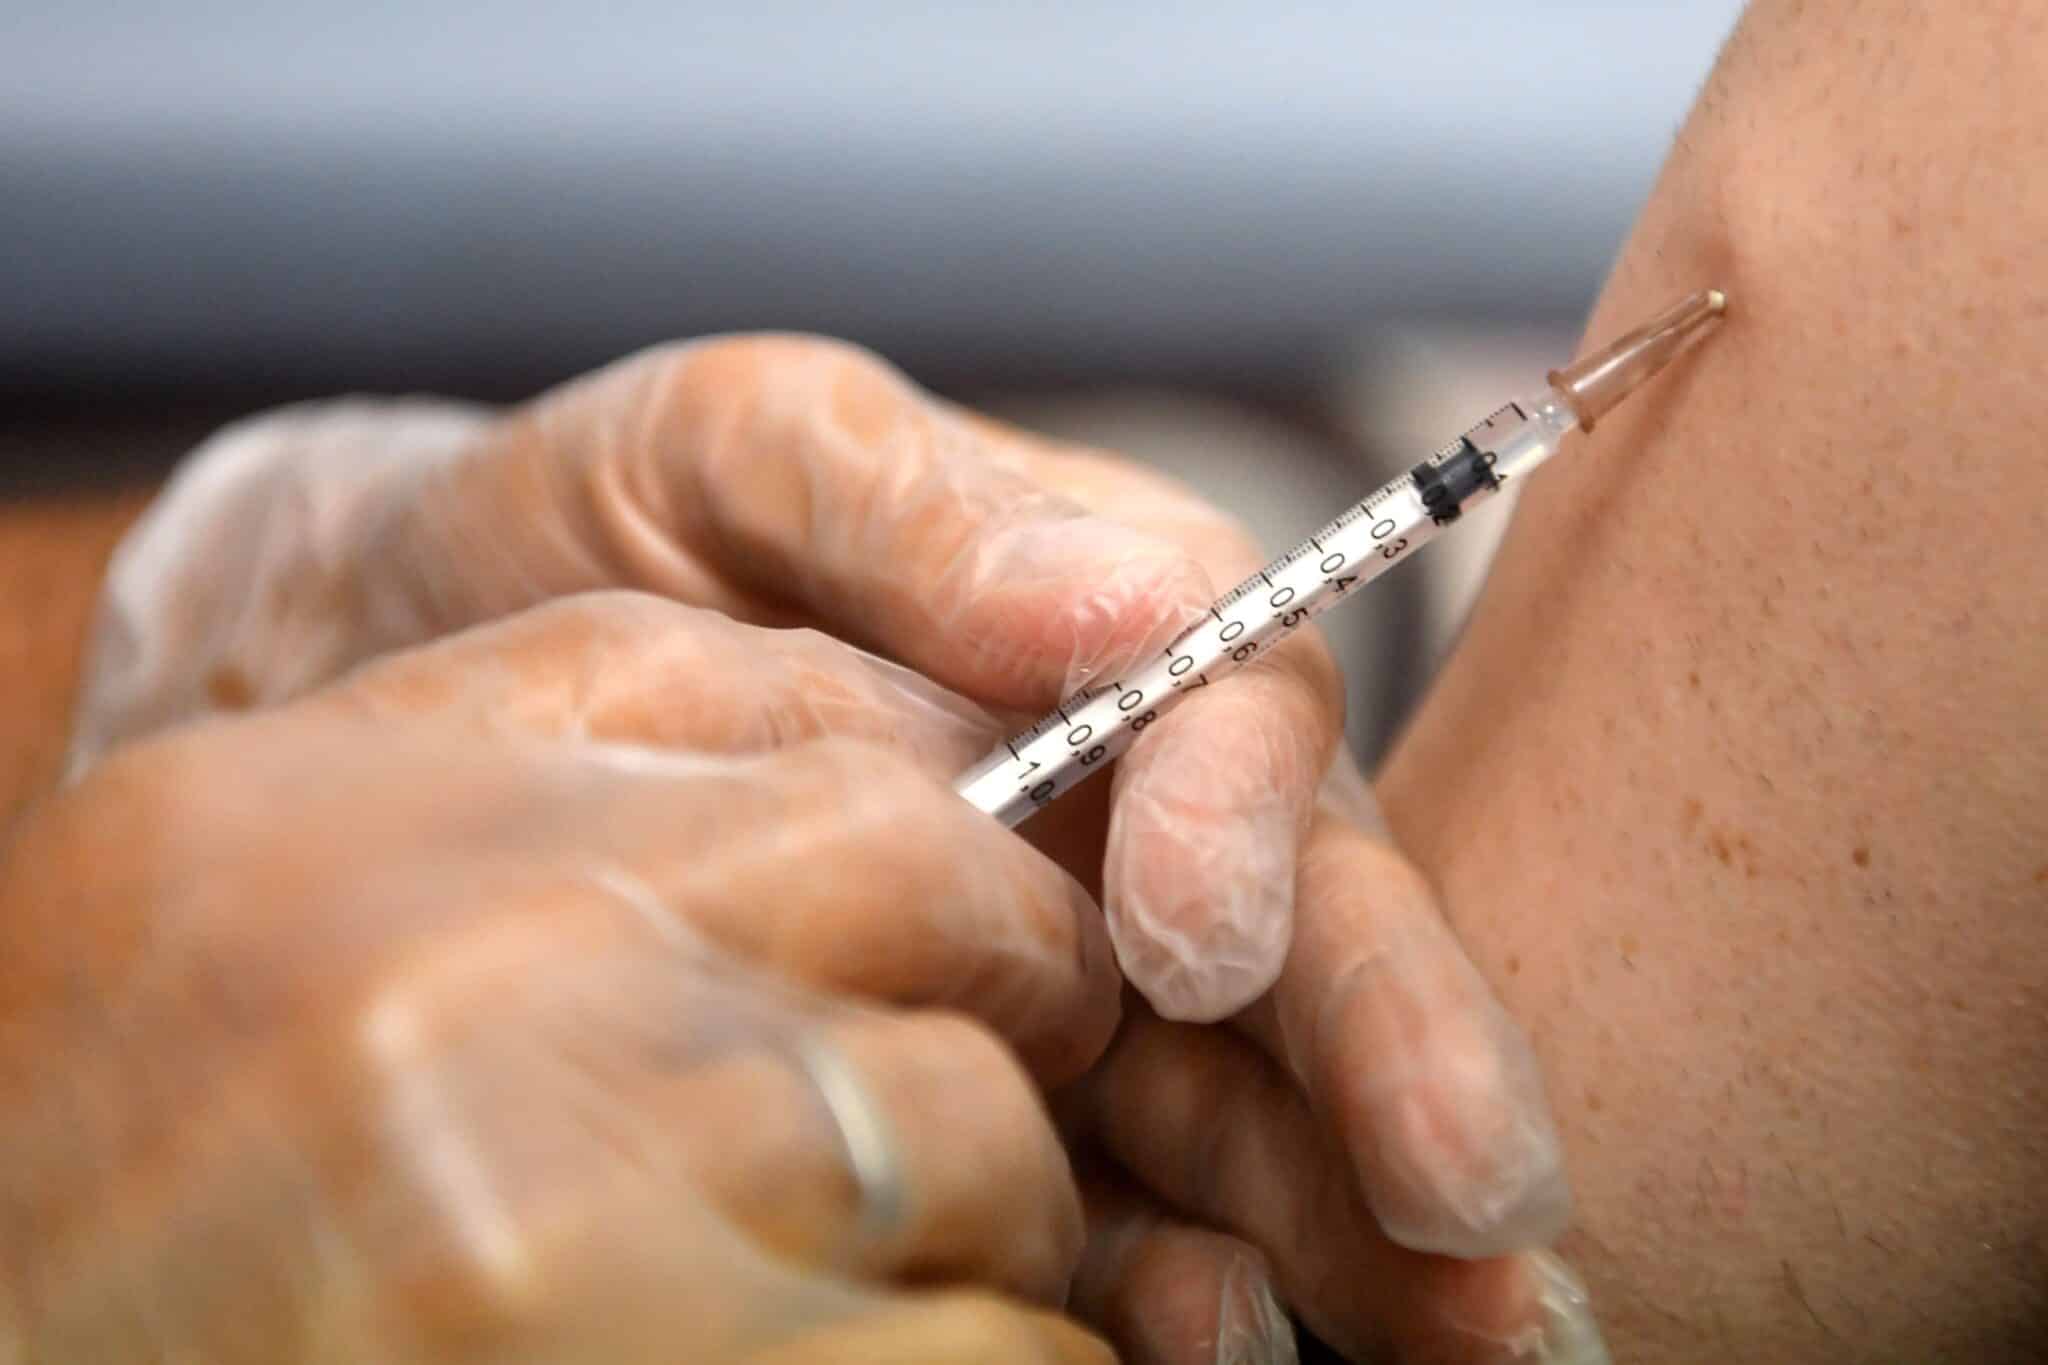 Vaccinated man put under quarantine after roommate got monkeypox loses court case